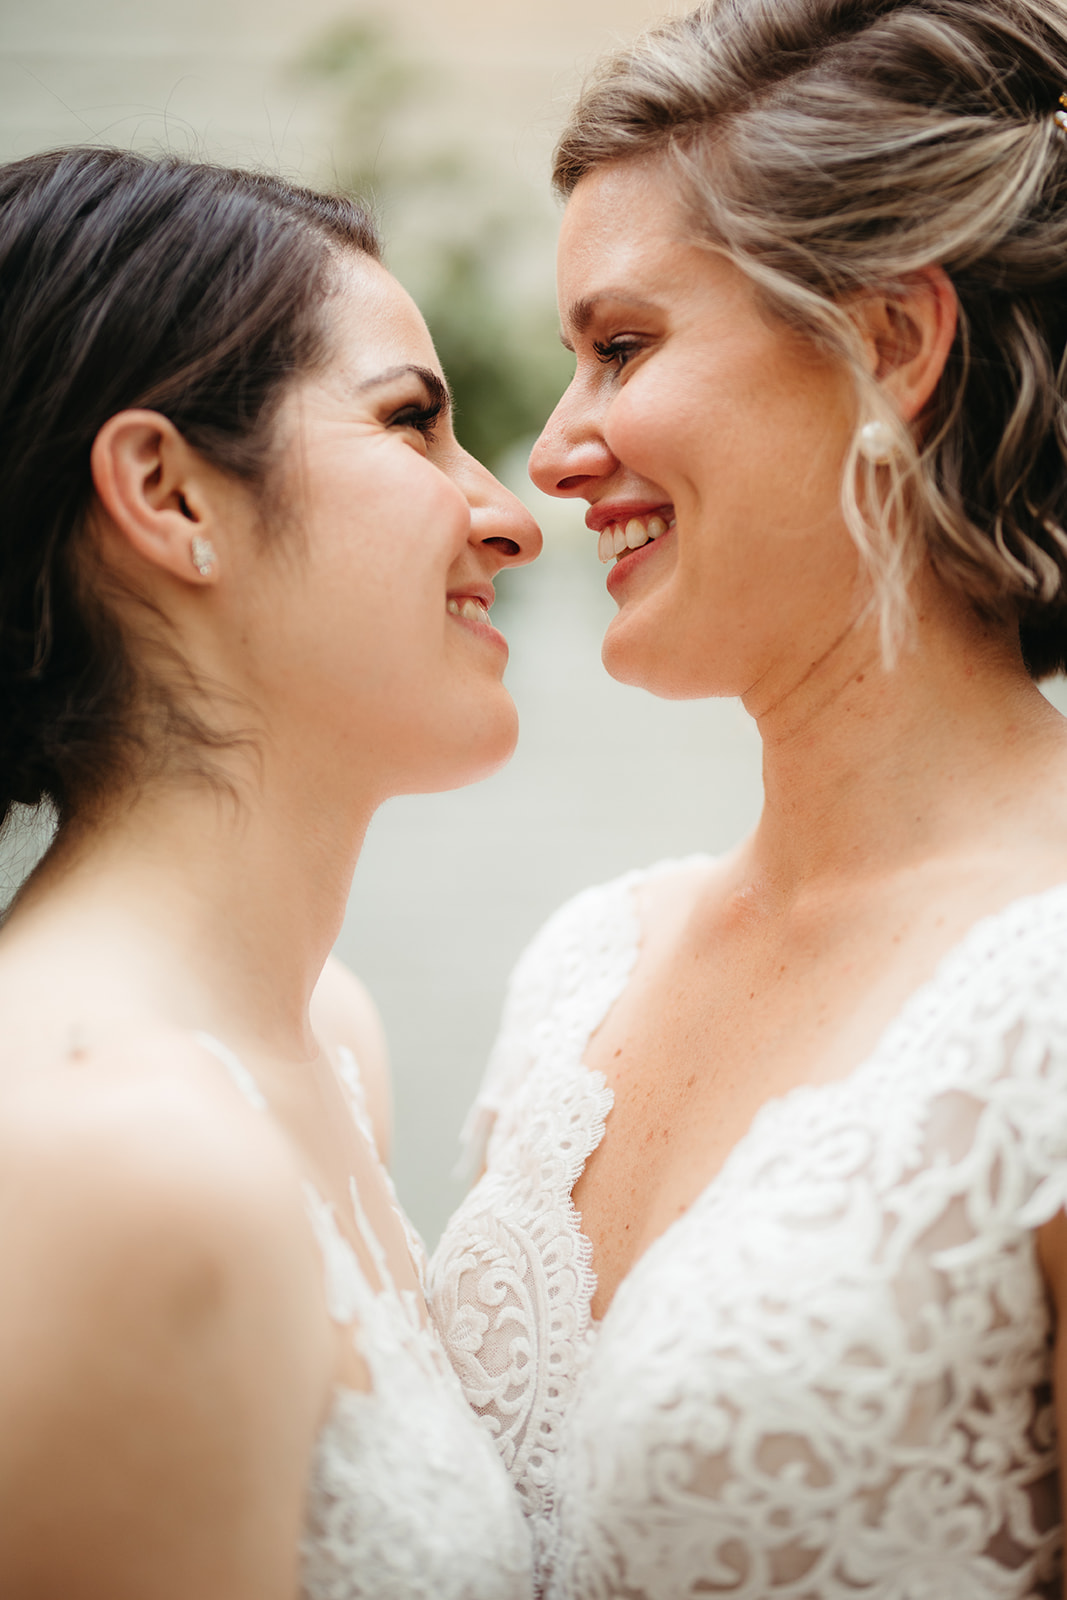 LGBTQ+ affirming wedding photographer Washington DC